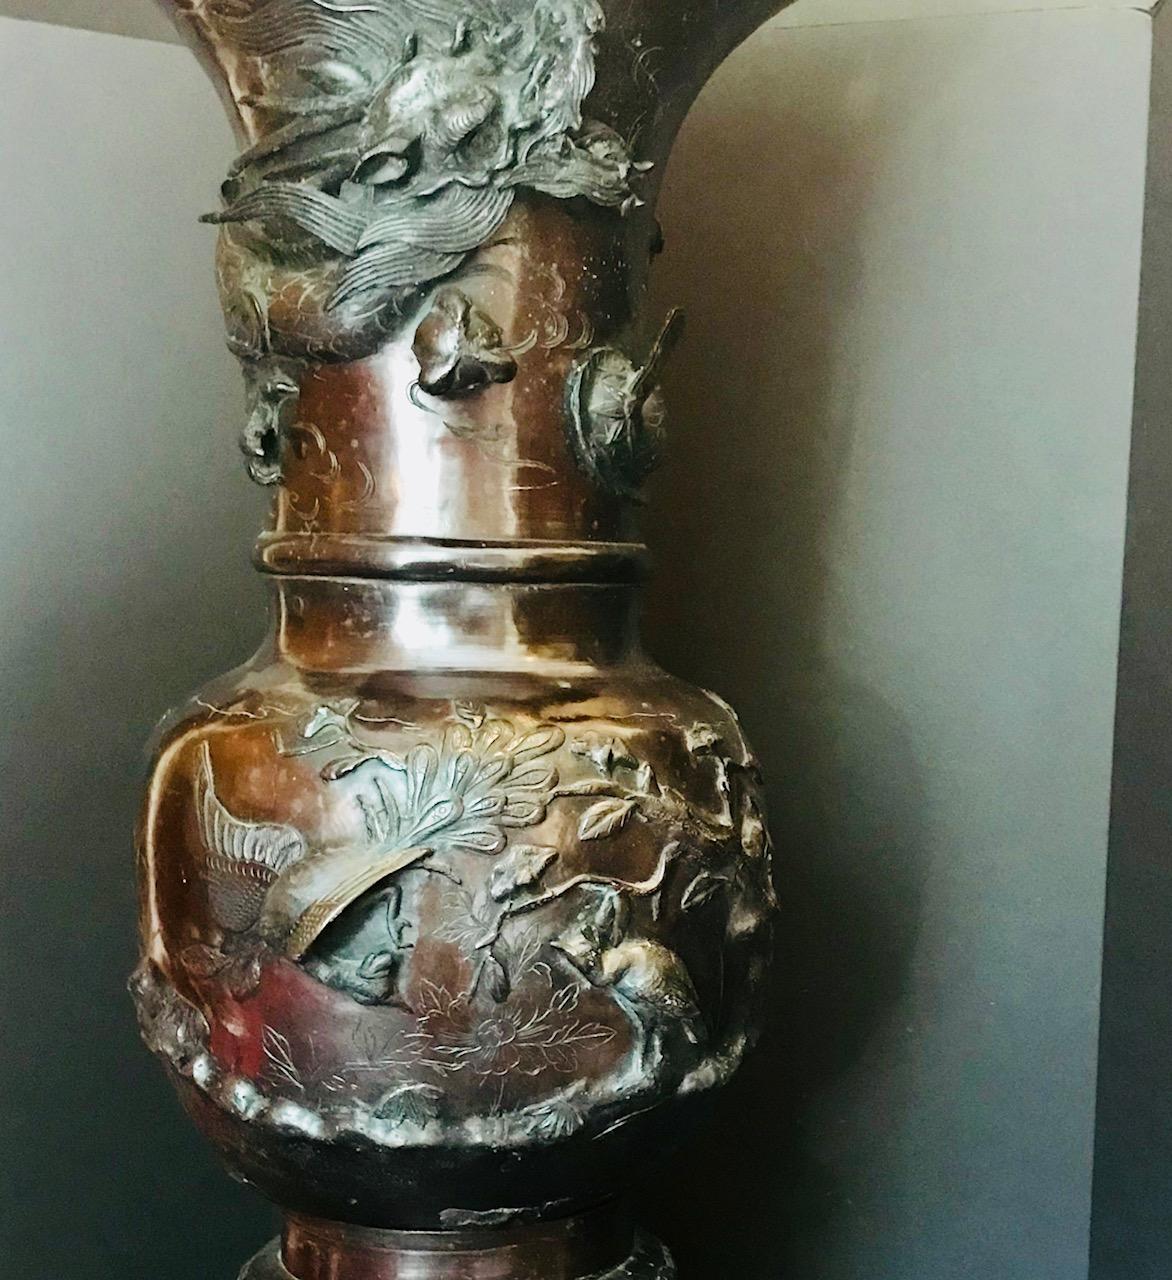 intricate marble vase